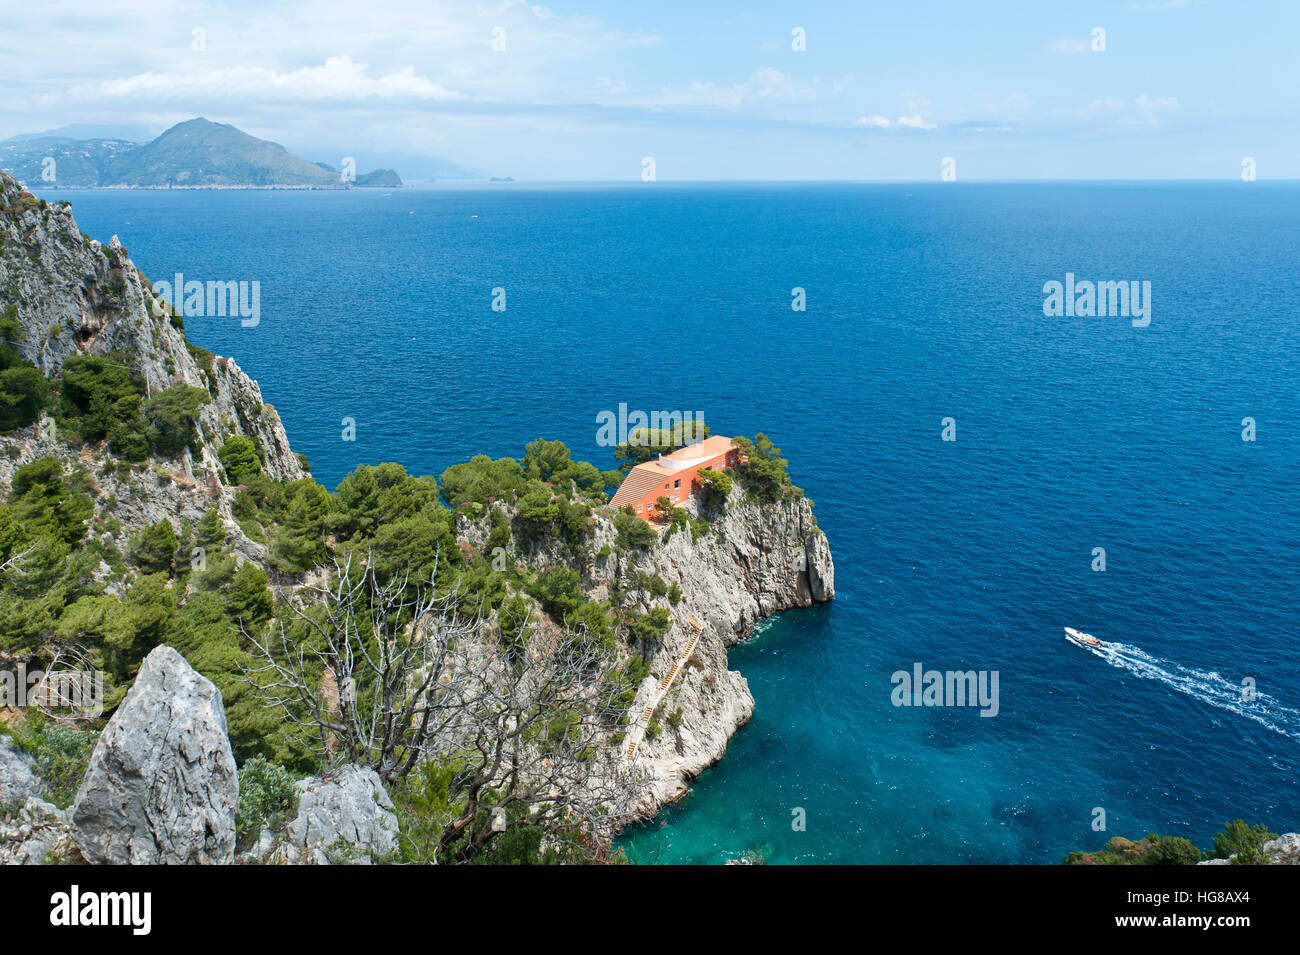 View of the coast and sea with Villa Malaparte, Island of Capri, Gulf of Naples, Italy Stock Photo